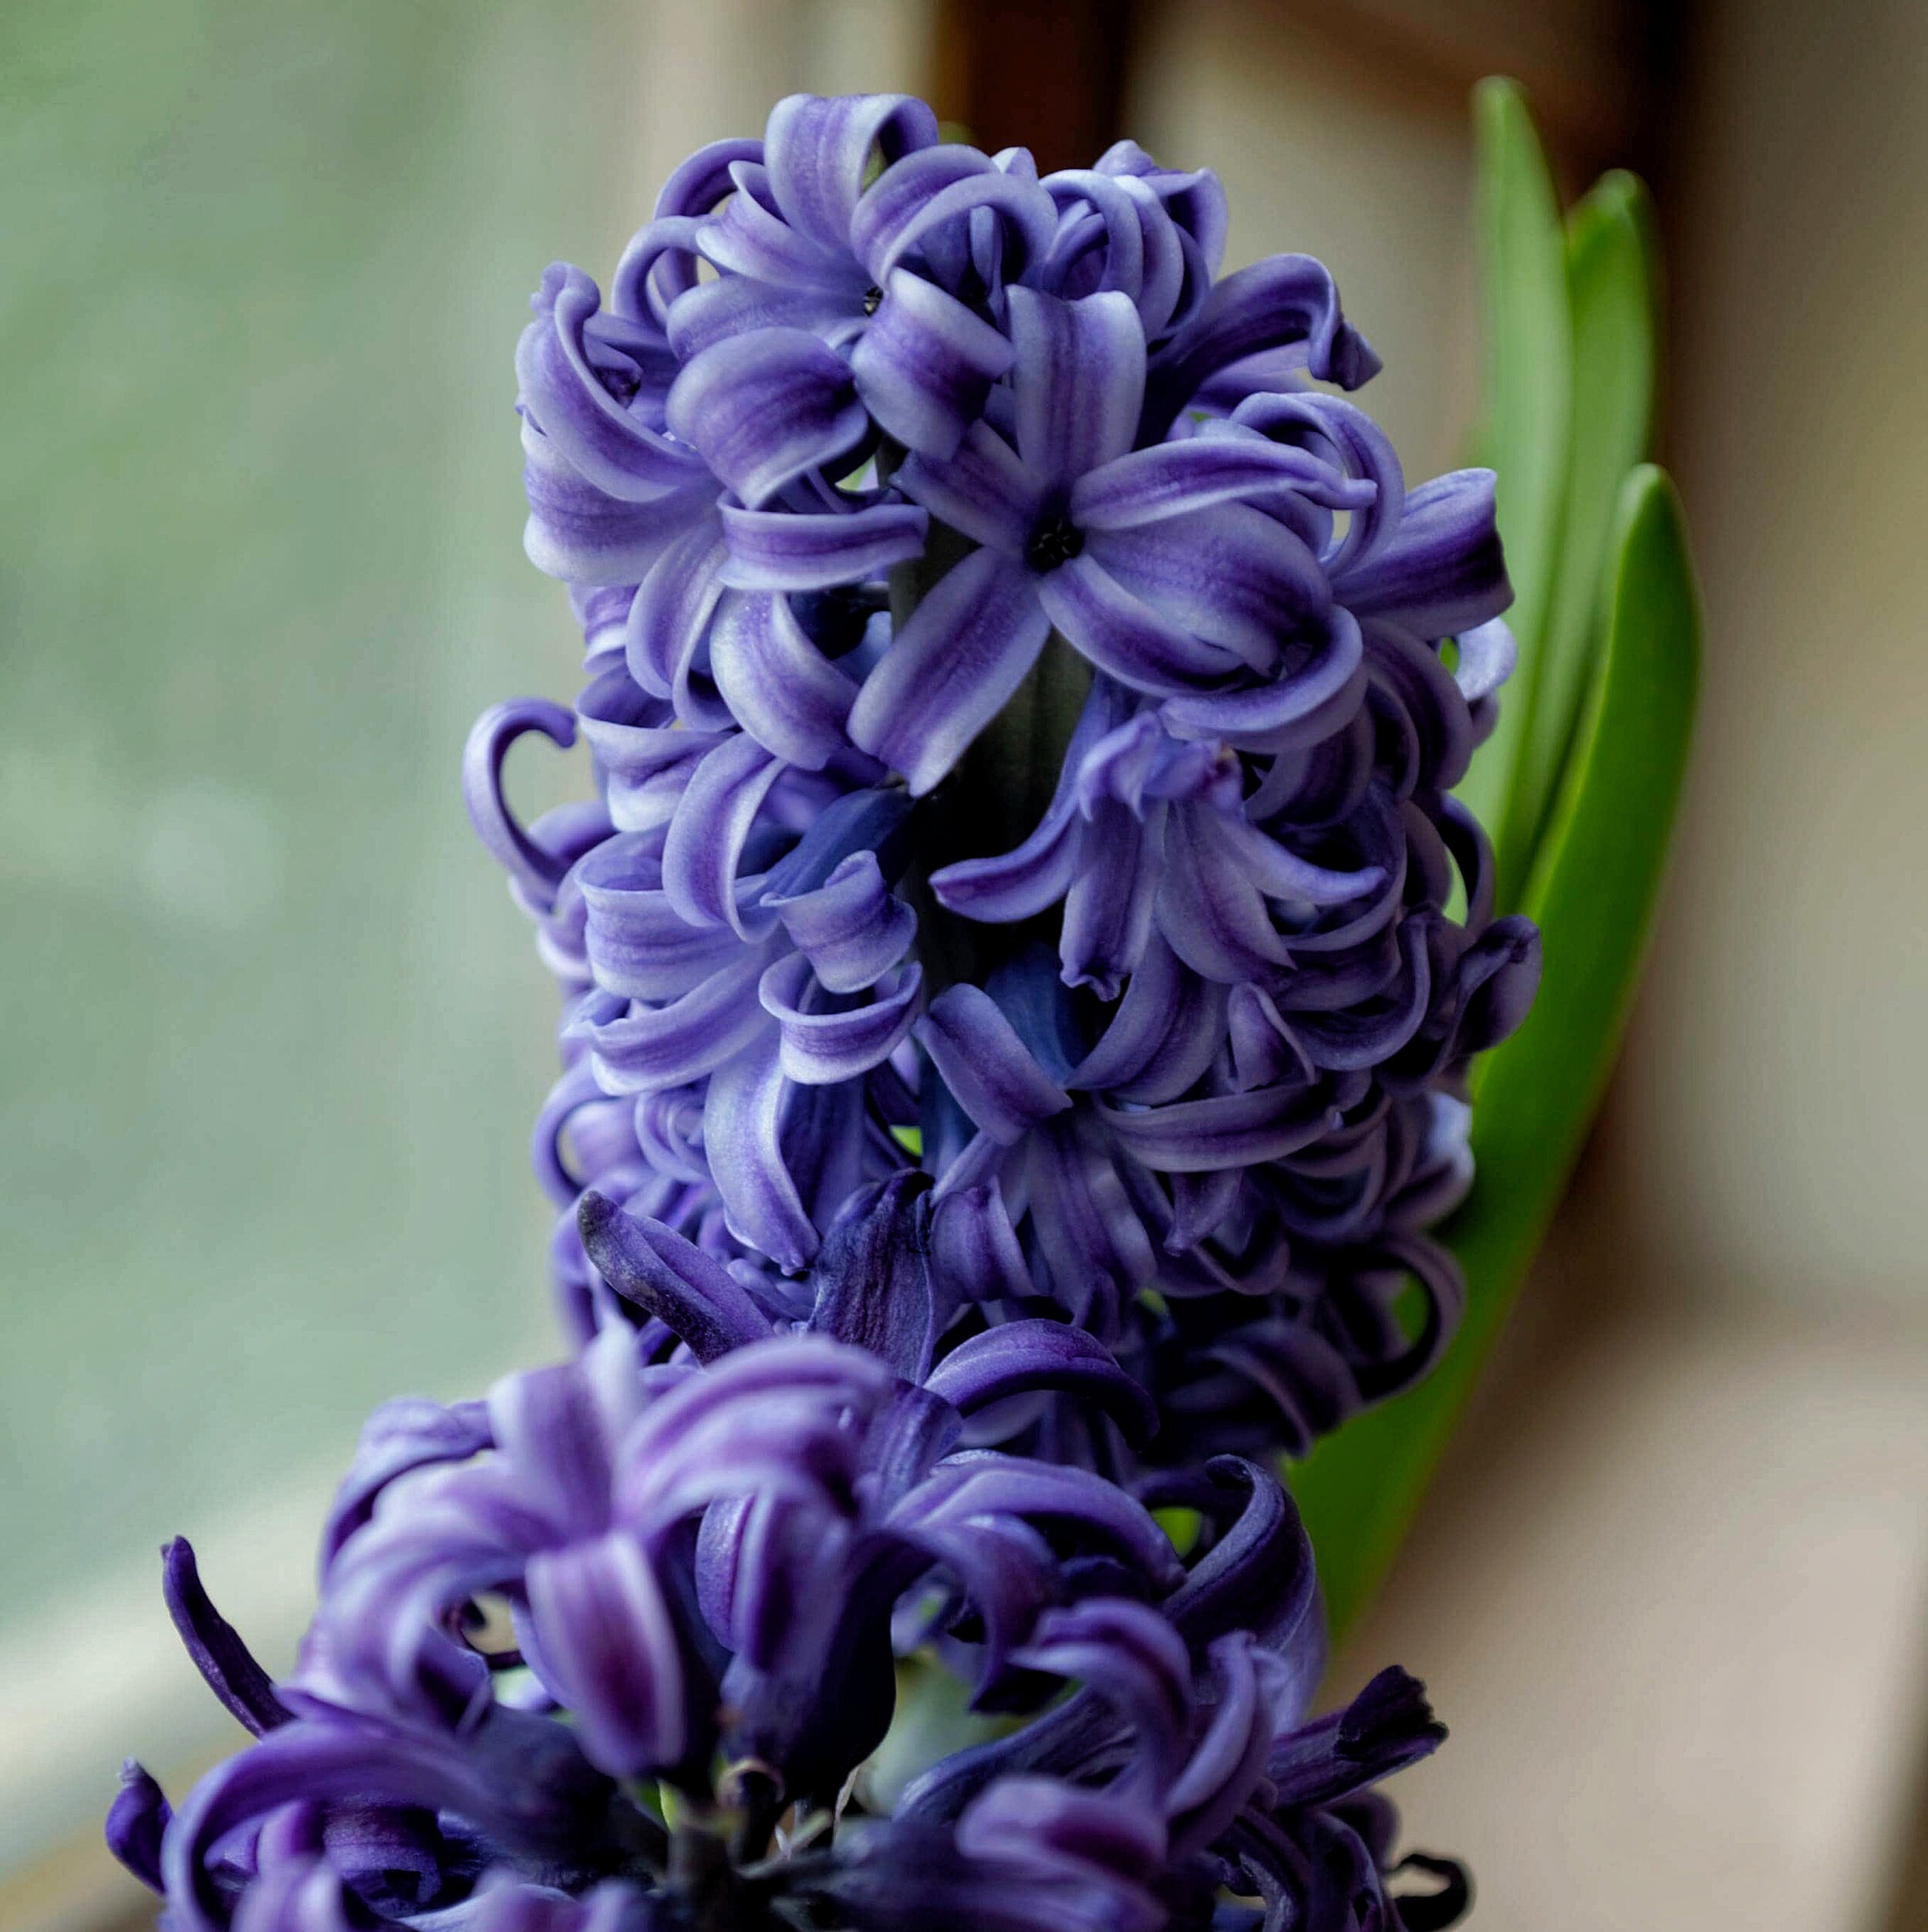 selective-focus-photography-of-purple-hyacinth-flower-1018142.jpg